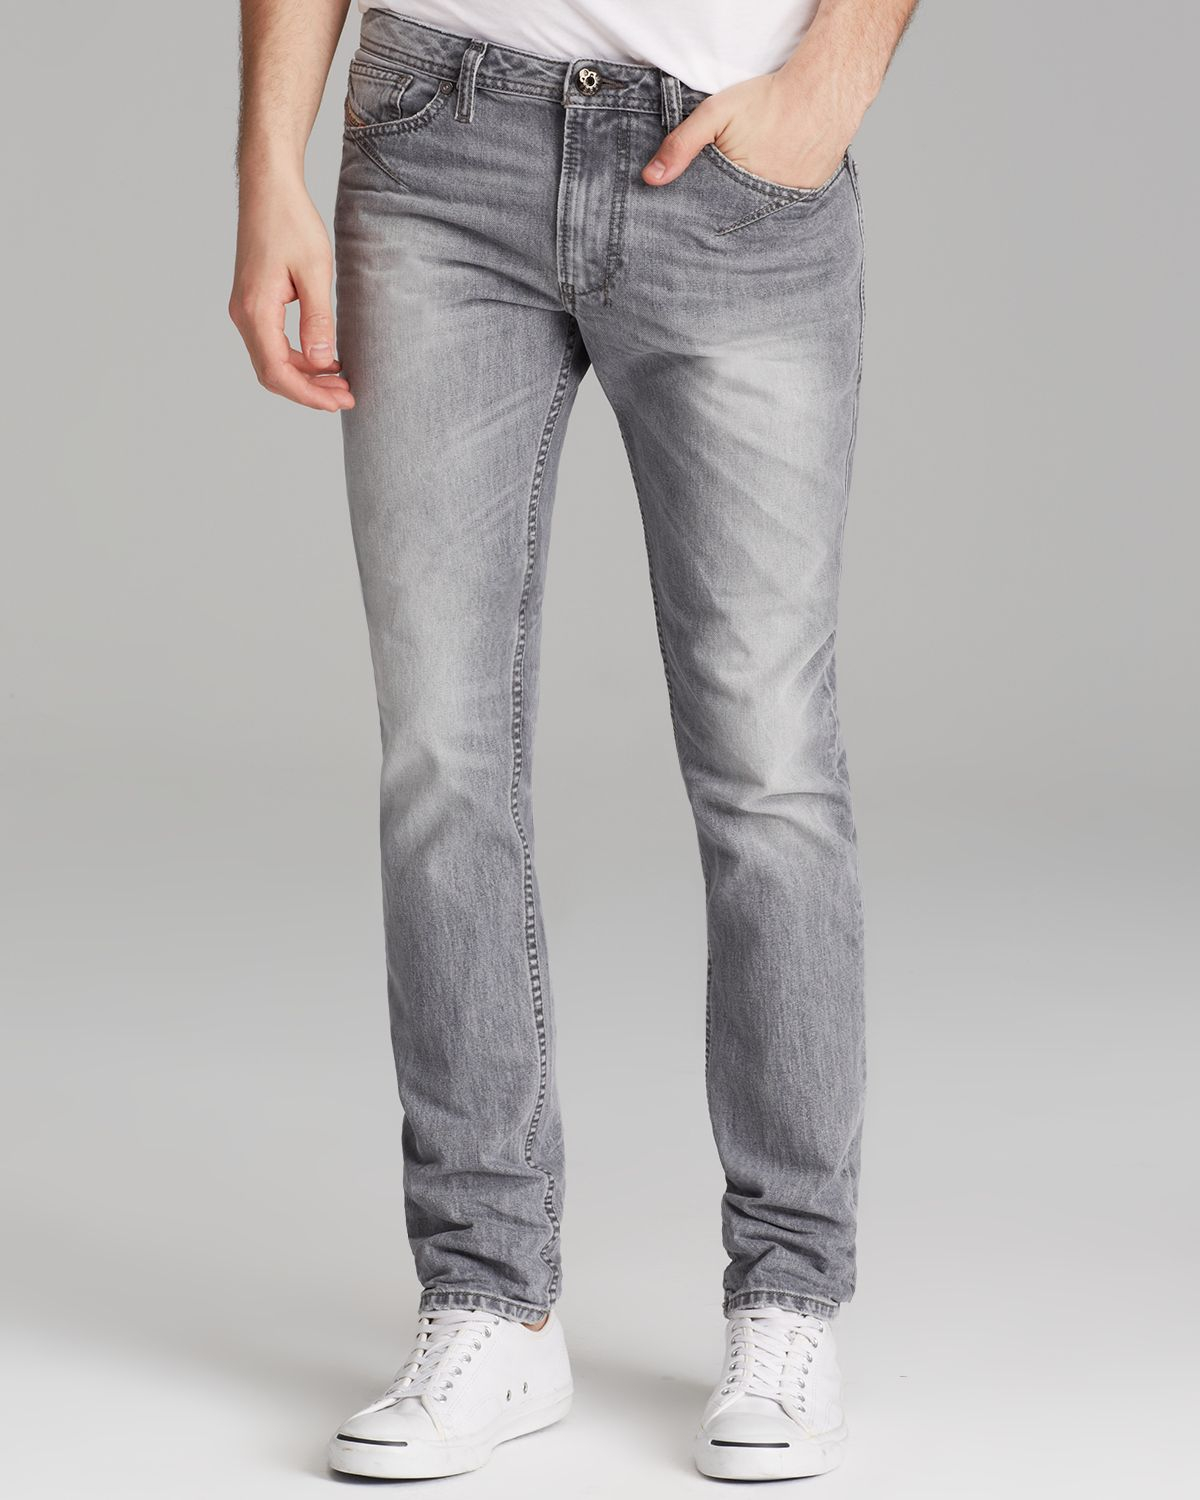 DIESEL Jeans Shioner Slim Fit in Grey in Gray for Men - Lyst